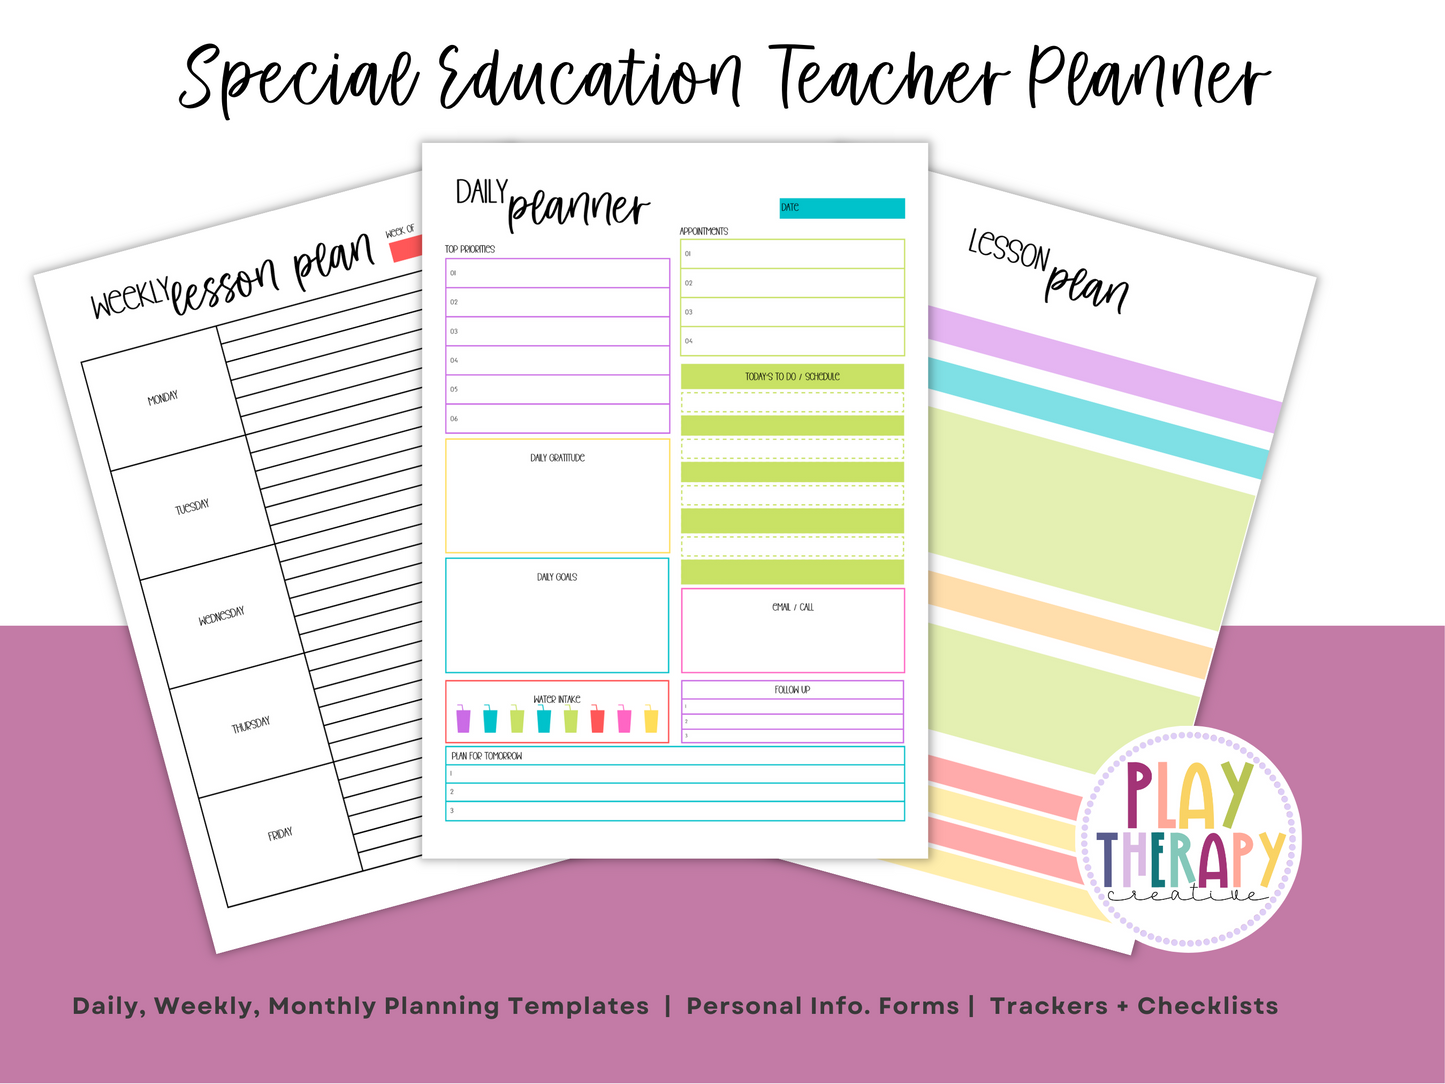 SpEd Teacher Printable Planner - Bright Rainbow Stripe Theme